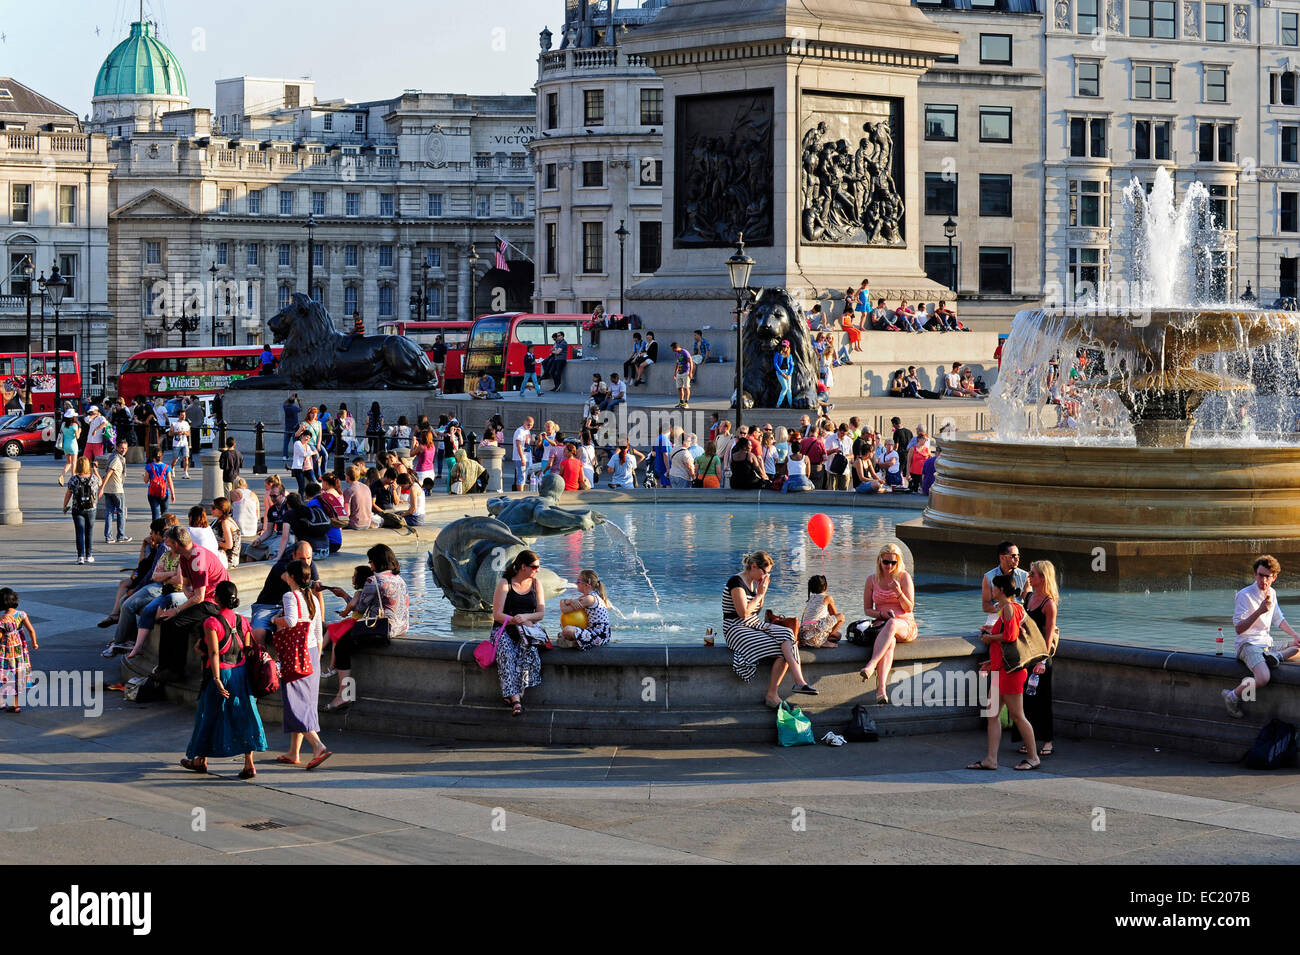 Fountain with people, Trafalgar Square, West End, London, England, United Kingdom Stock Photo